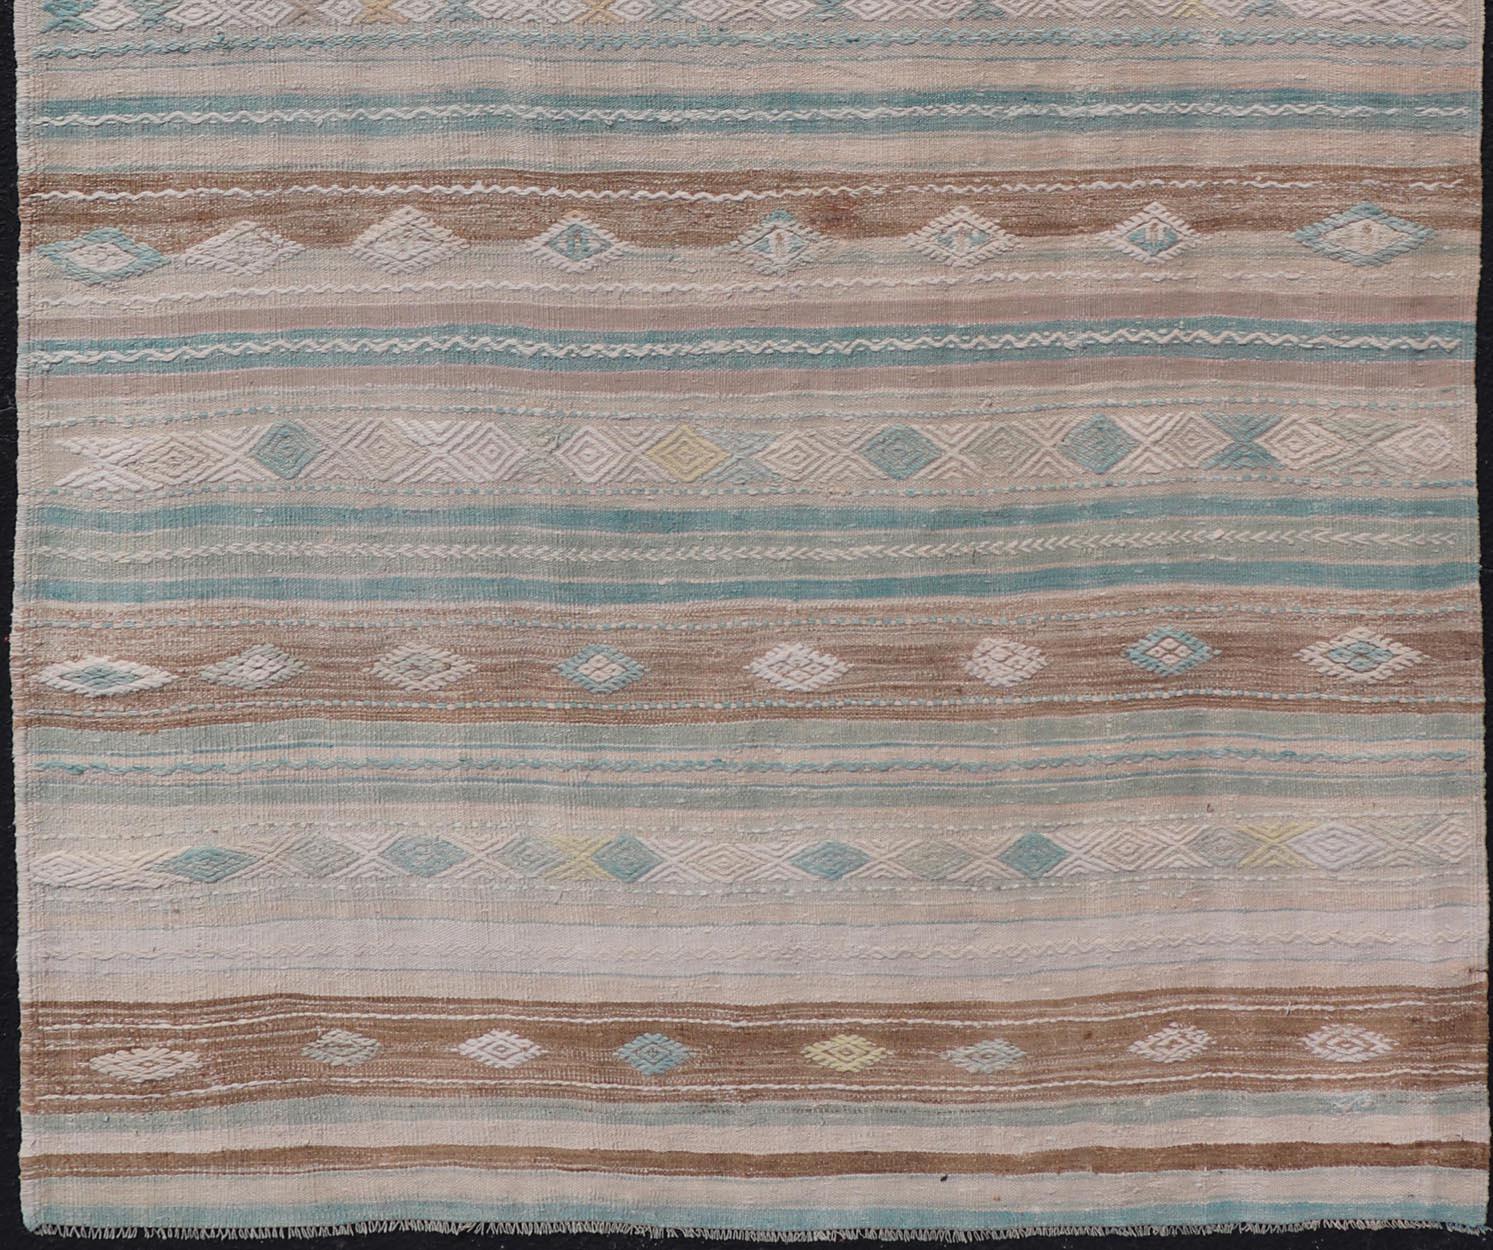 Turkish Kilim vintage carpet in light taupe, seafoam greenish color, light brown, and cream,
Keivan Woven Arts / rug EN-13956, country of origin / type: Turkey / Kilim, circa 1950

Measures: 5'2 x 9'8.